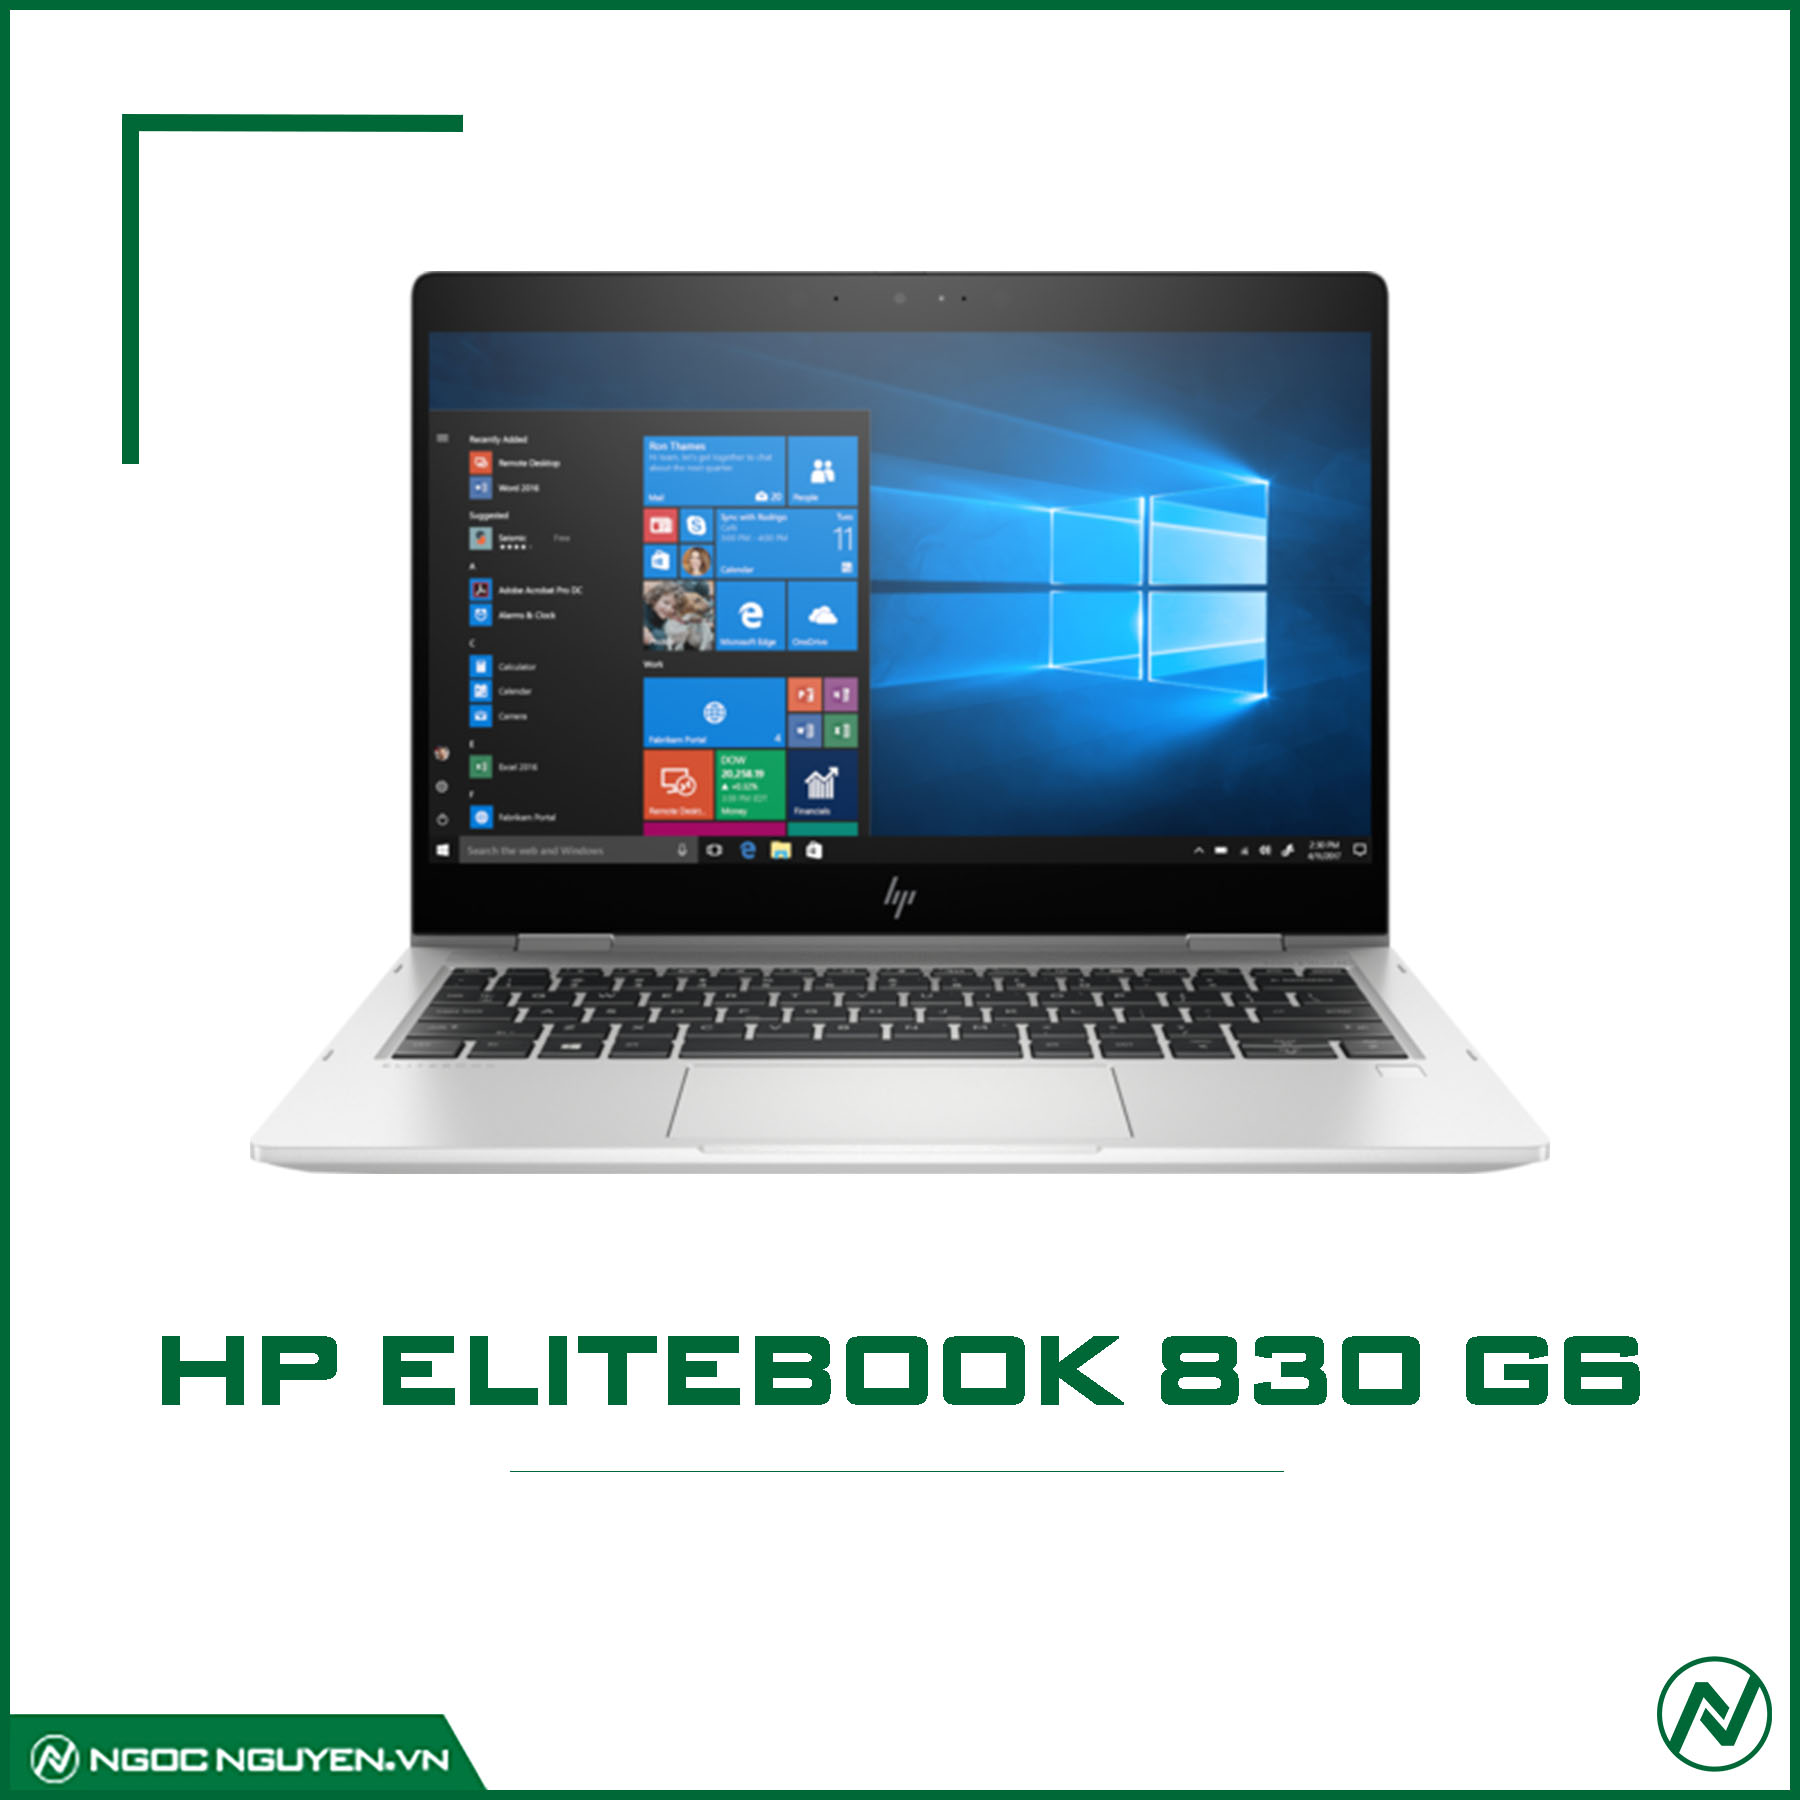 HP EliteBook x360 830 G6 i7-8565U/ RAM 8GB/ SSD 256GB/ UHD Graphics 620 / 13.3 INCH FHD